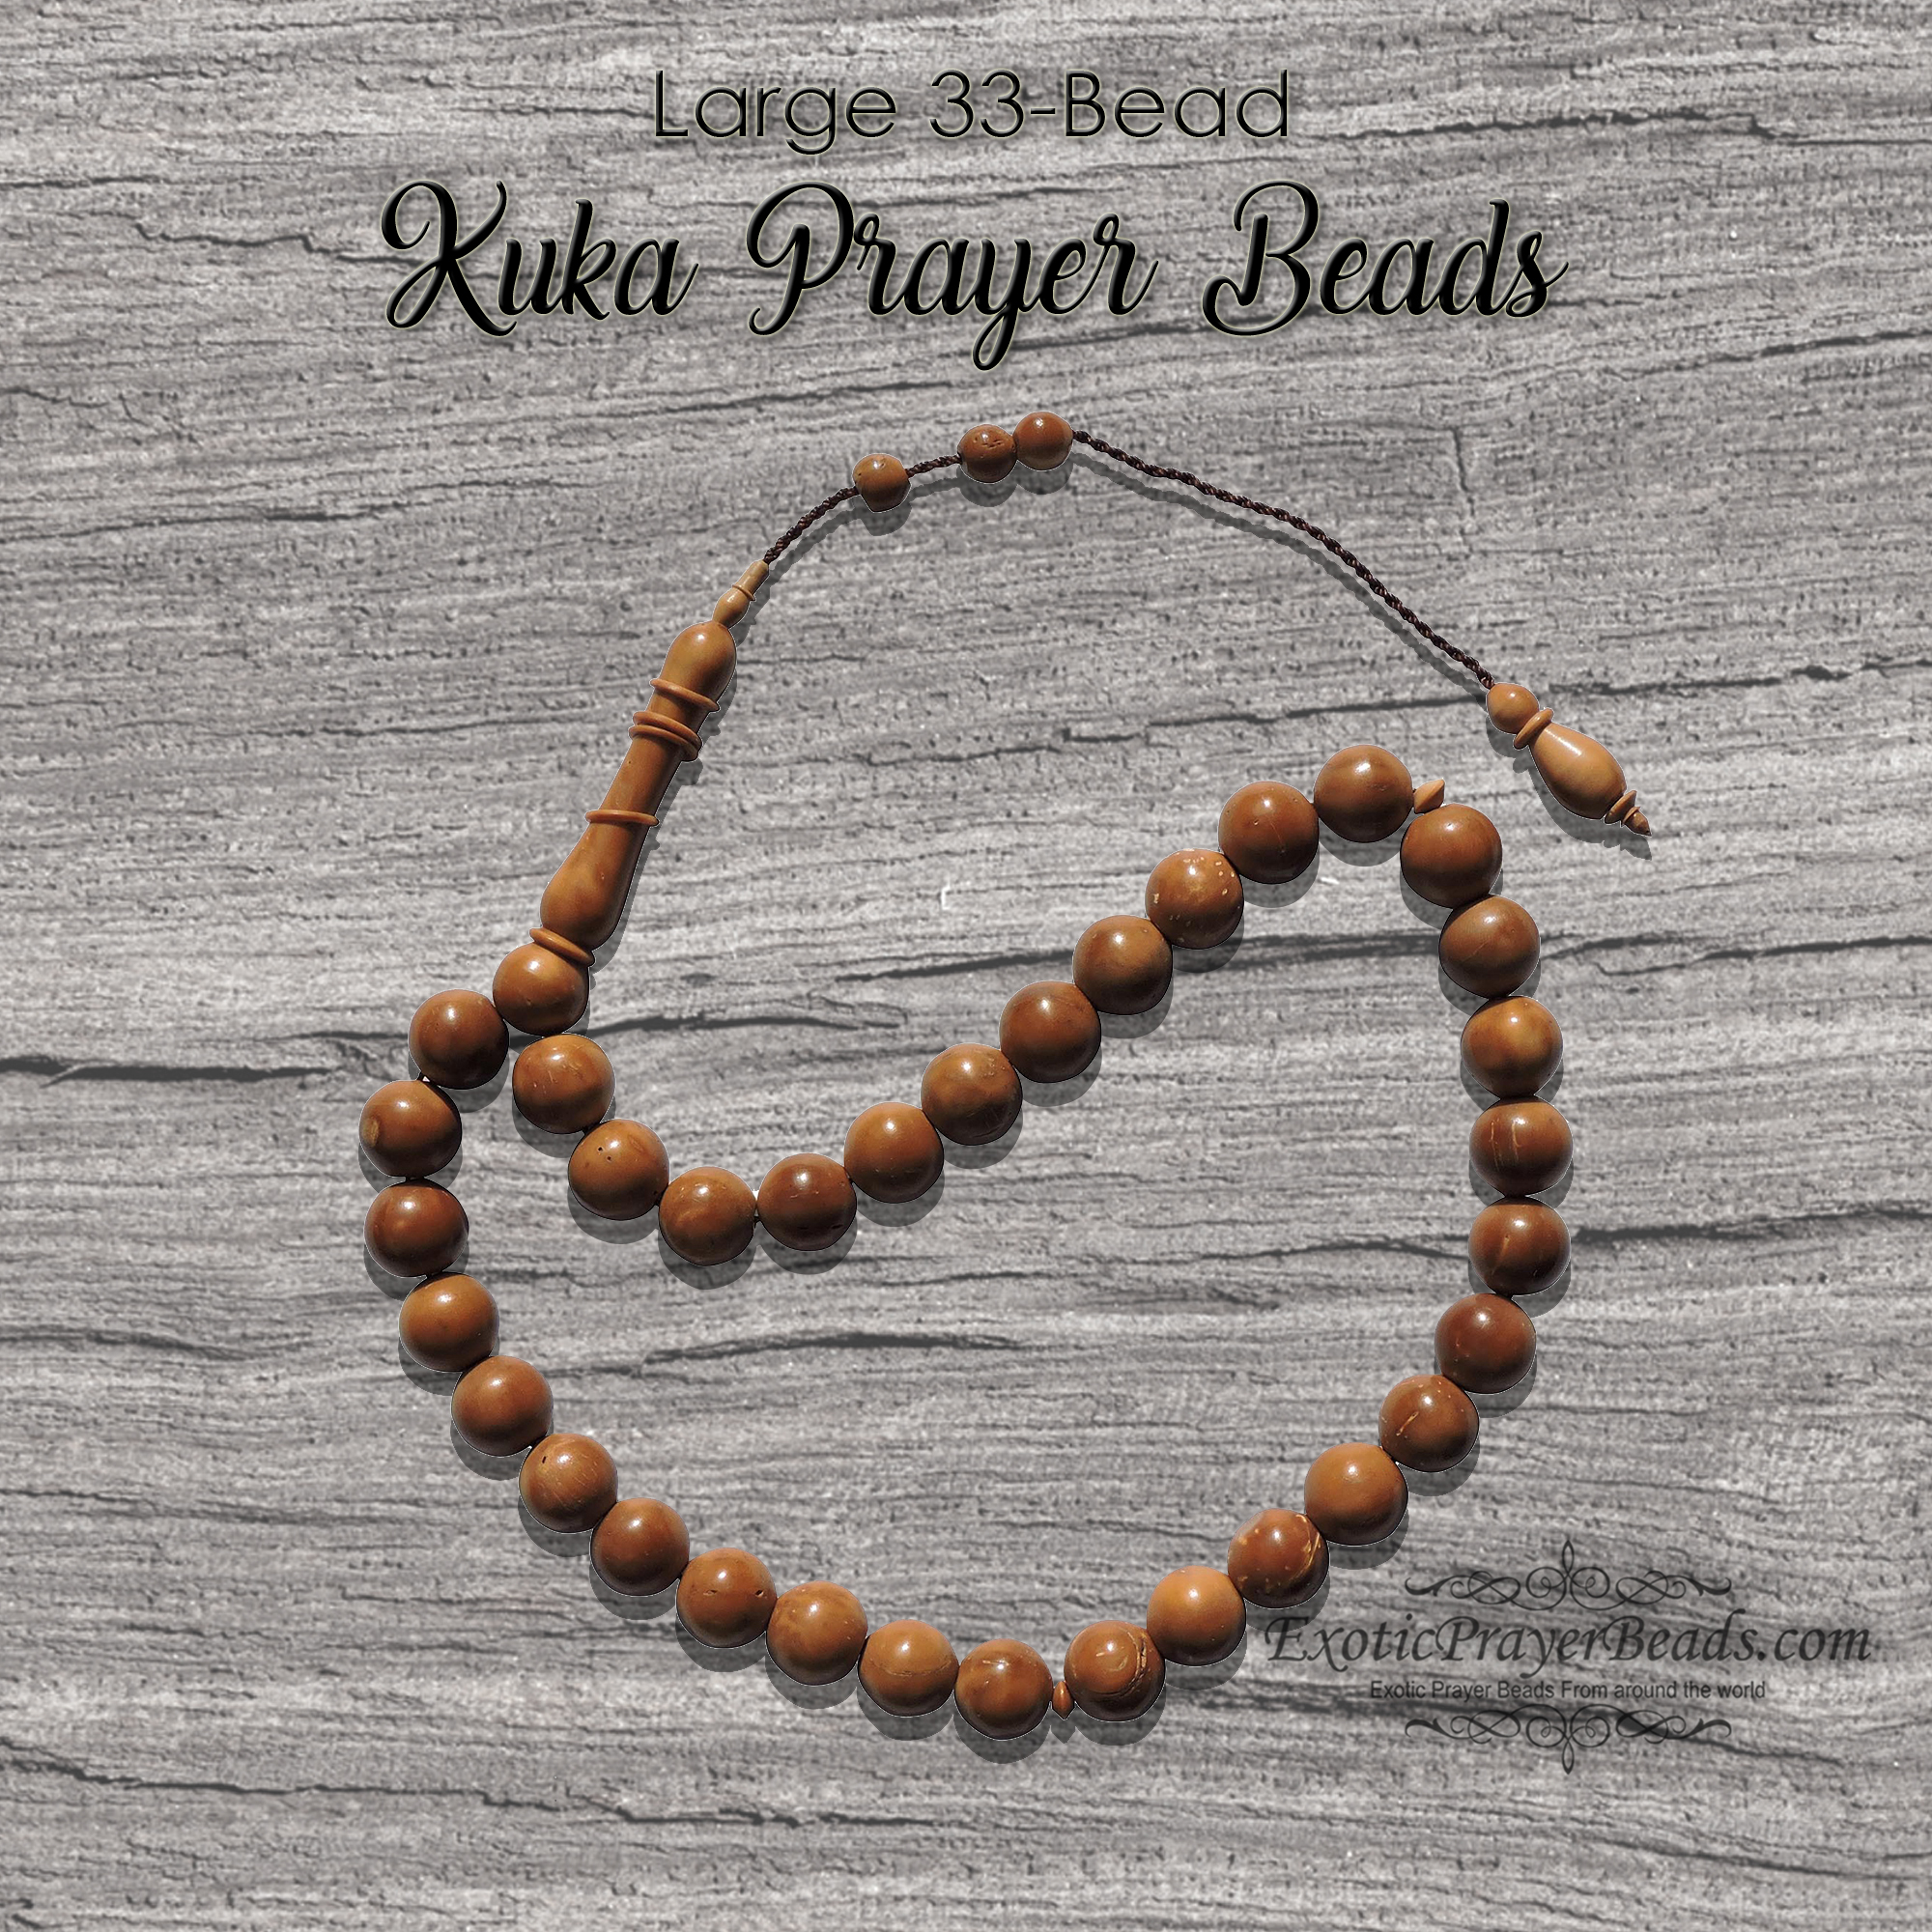 Large 33-Bead Kuka Prayer Beads